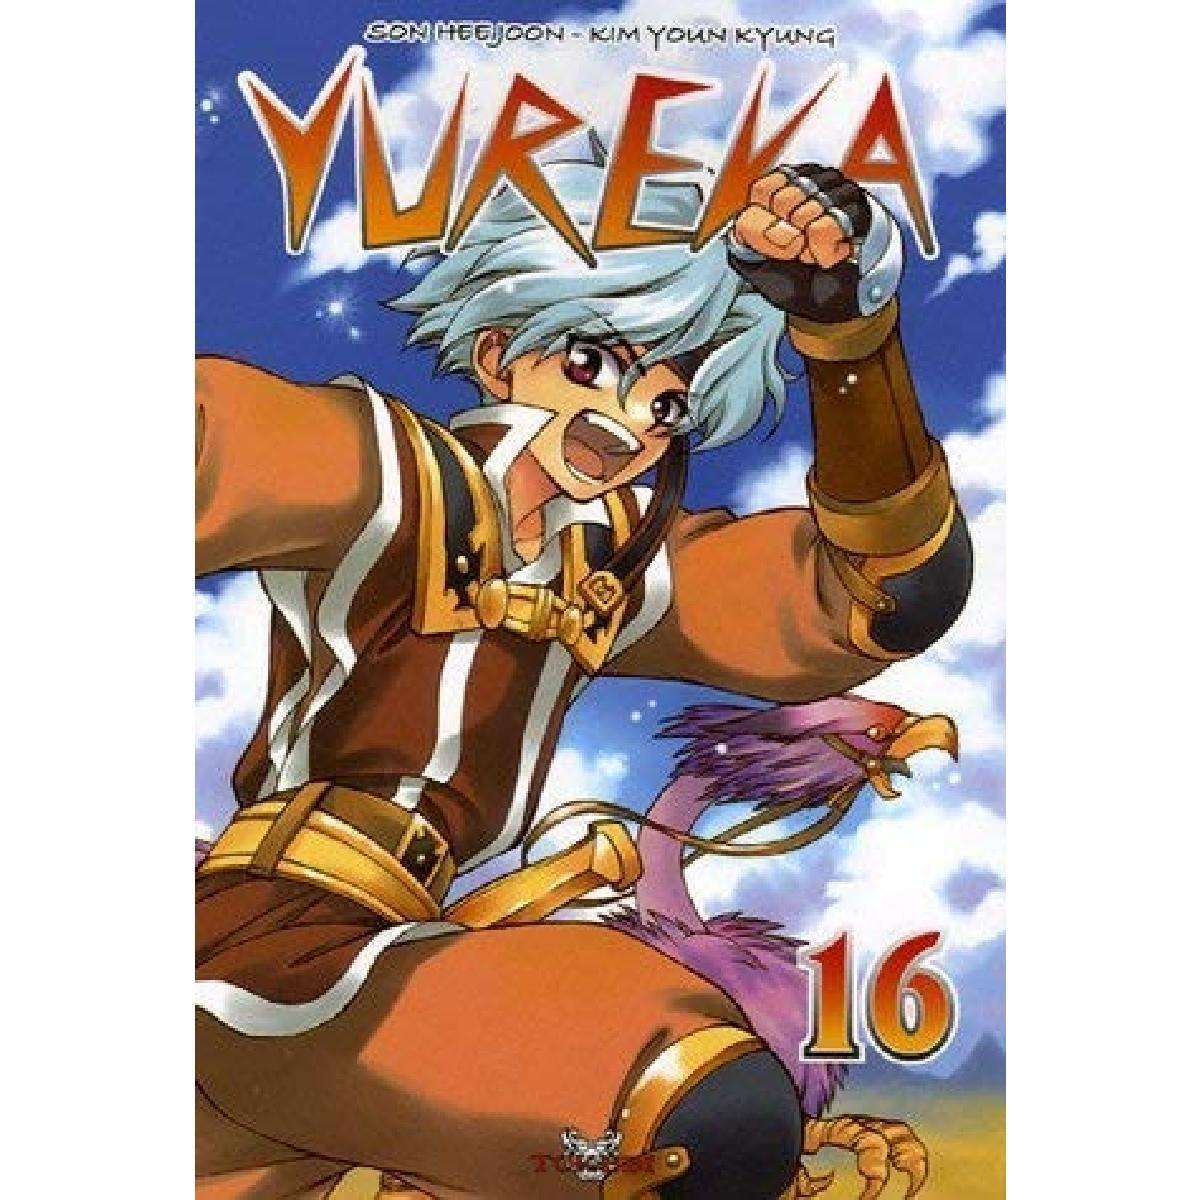 Manga Yureka Tome 16 - Editions Tokebi